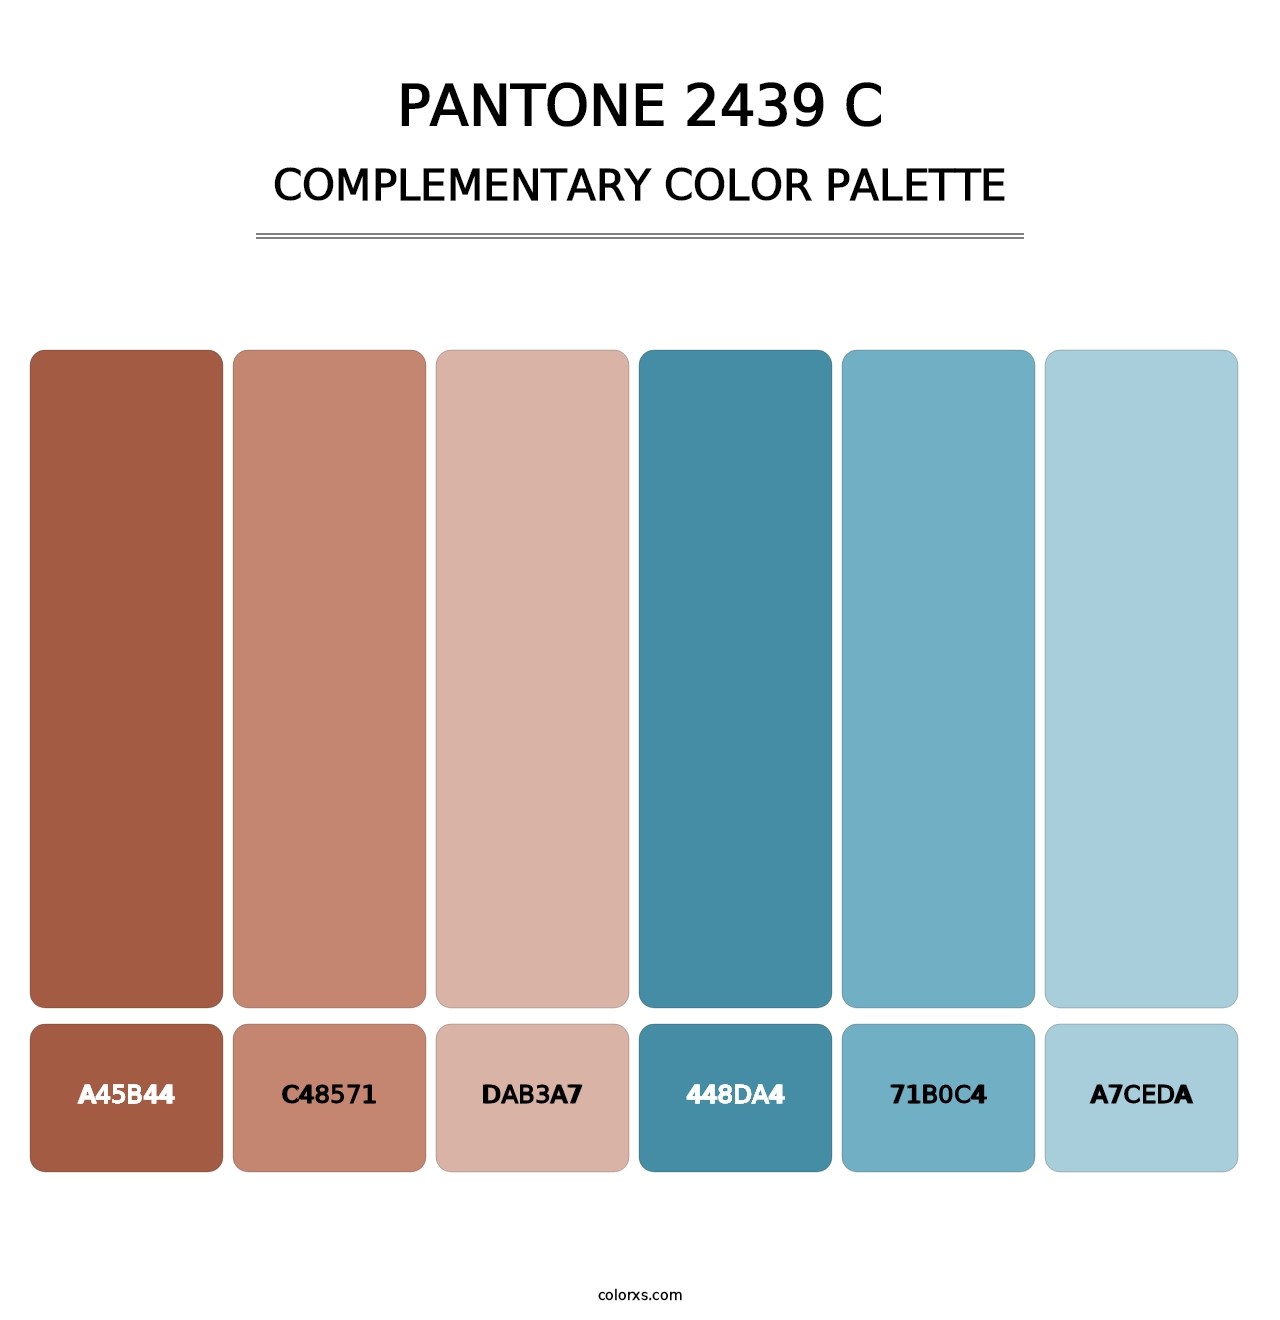 PANTONE 2439 C - Complementary Color Palette